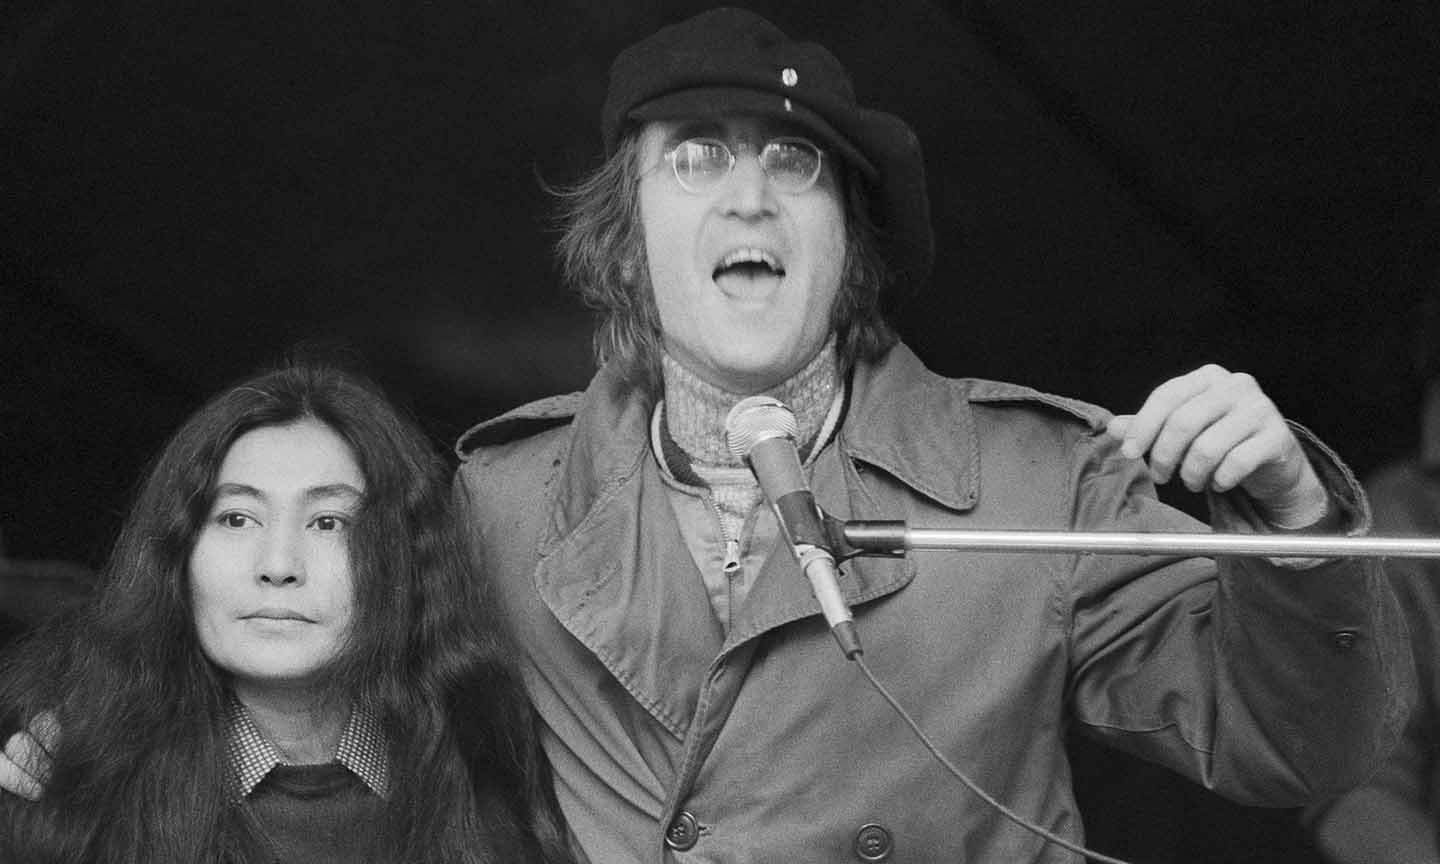 ‘Working Class Hero’: John Lennon and Yoko Ono On The Classic Song